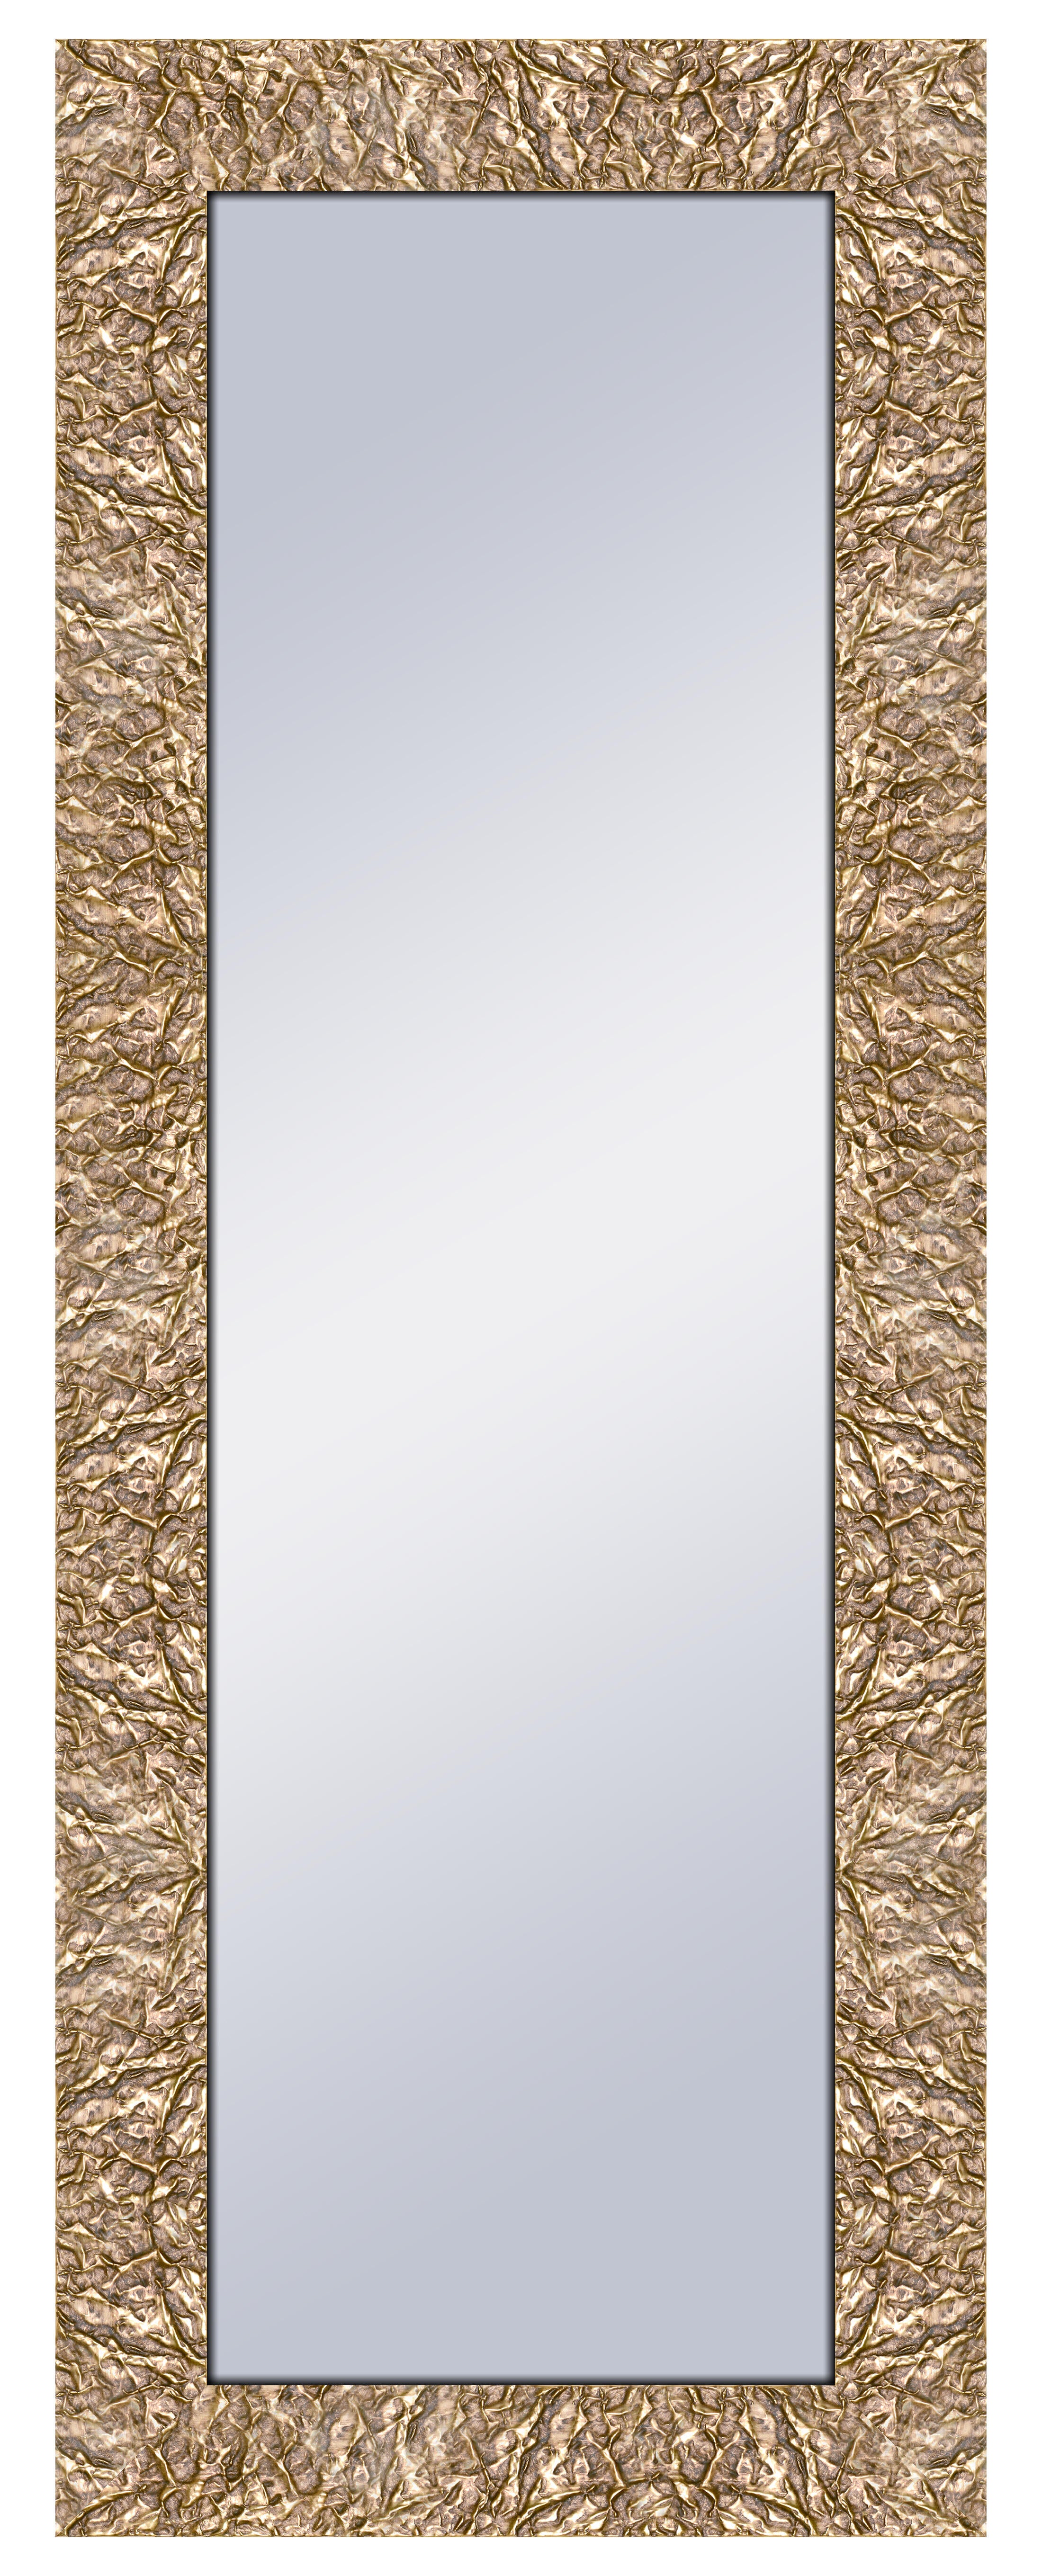 Espejo enmarcado rectangular bruno oro dorado 159 x 59 cm